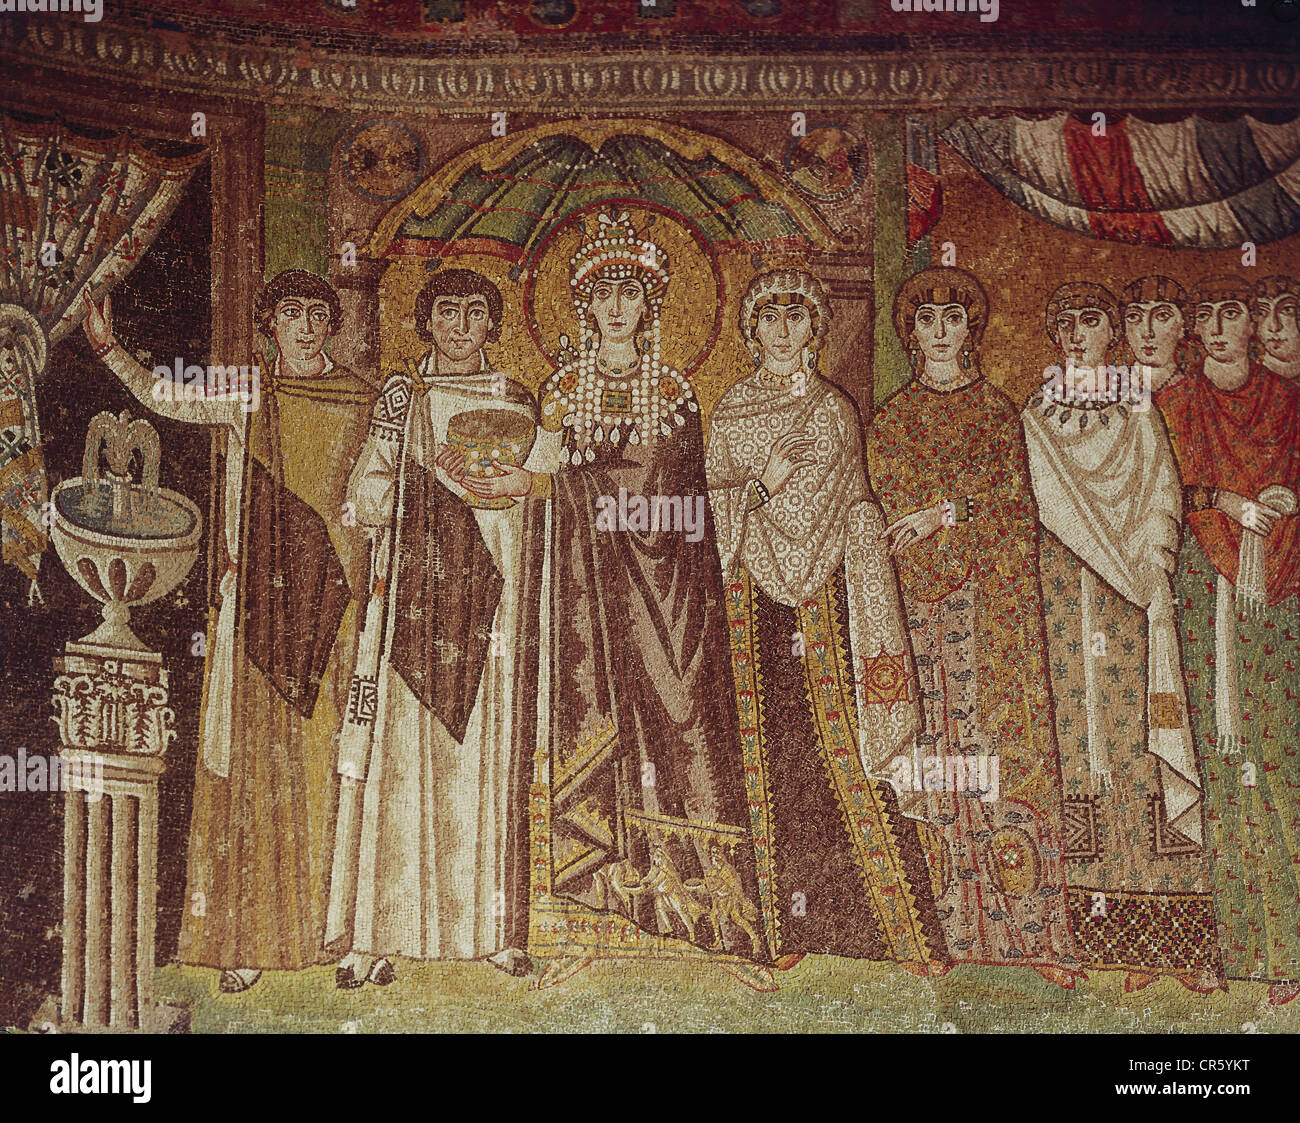 Teodora I, 497 - 28.6.548, emperatriz, mosaico bizantino, la Basílica de San Vitale, Ravenna, circa 540, románico, un cristiano temprano Foto de stock